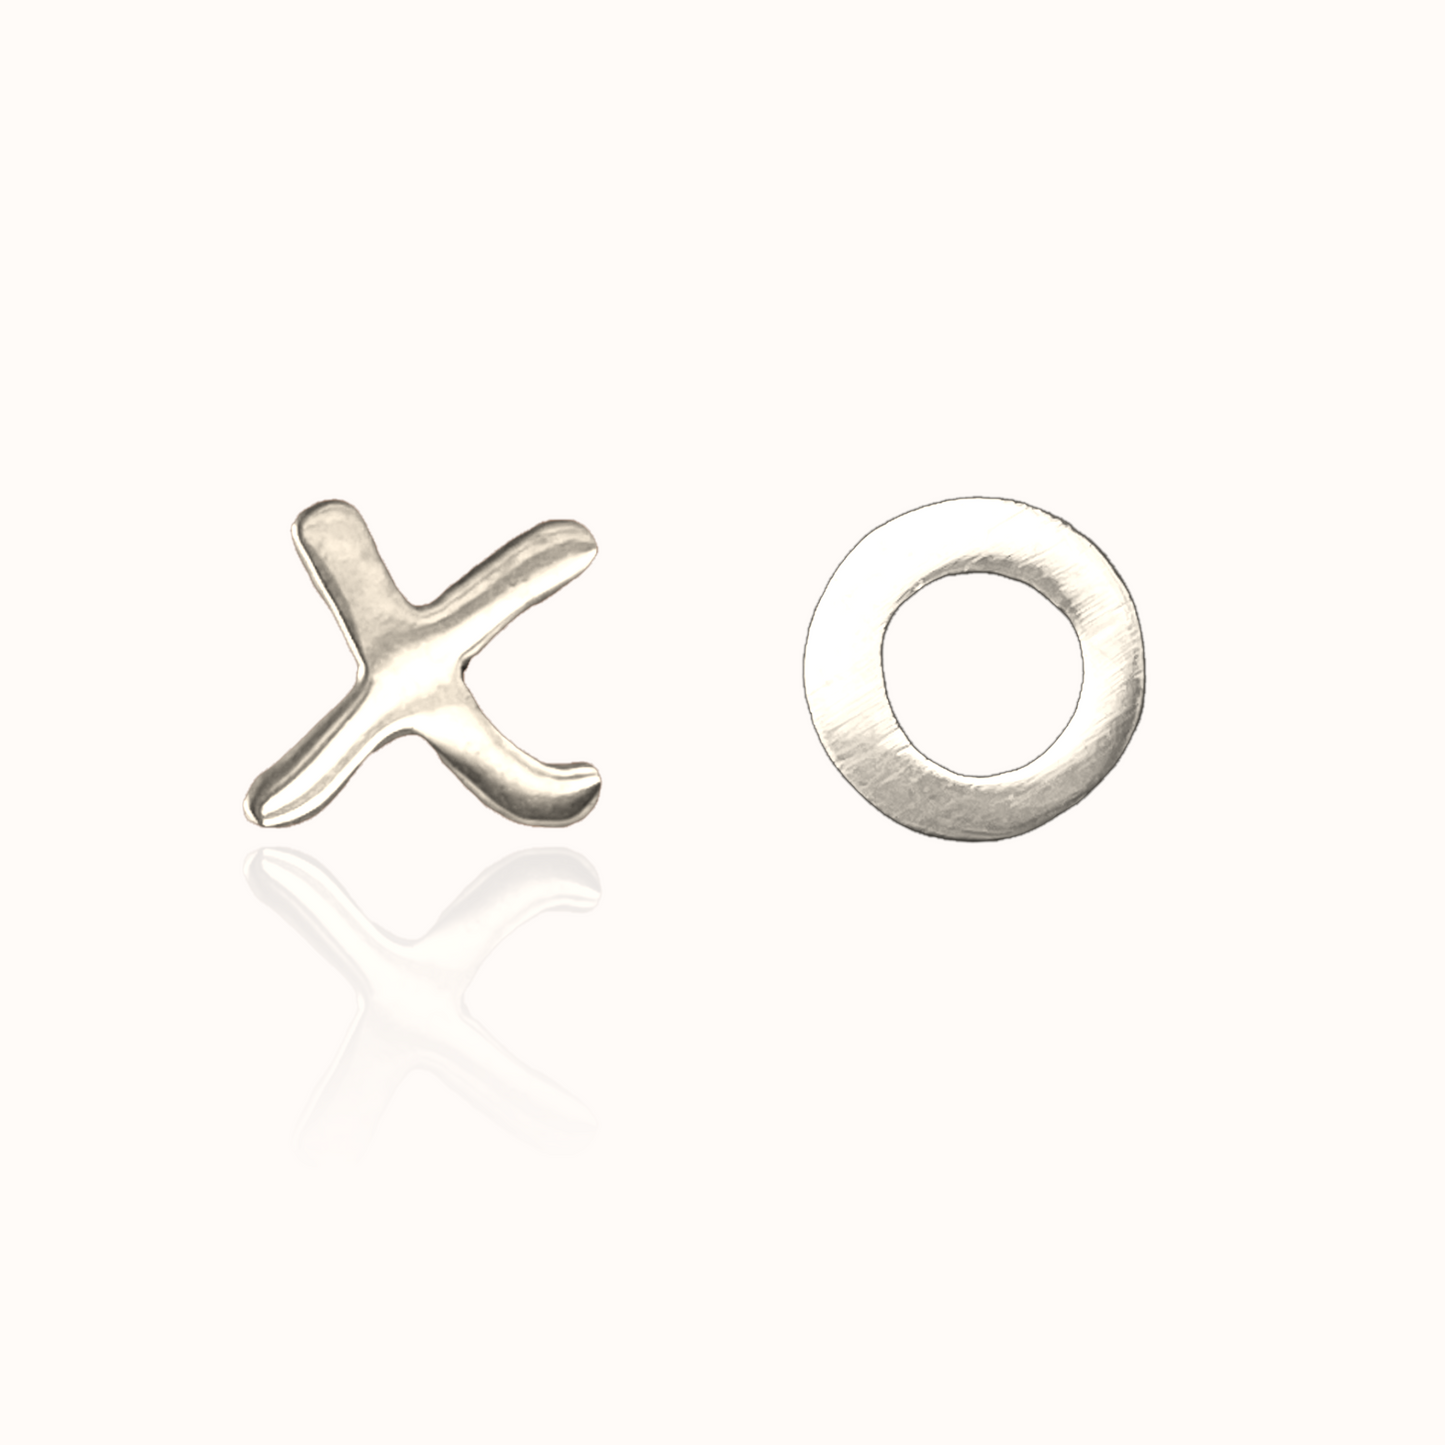 X & O Earring Studs Silver